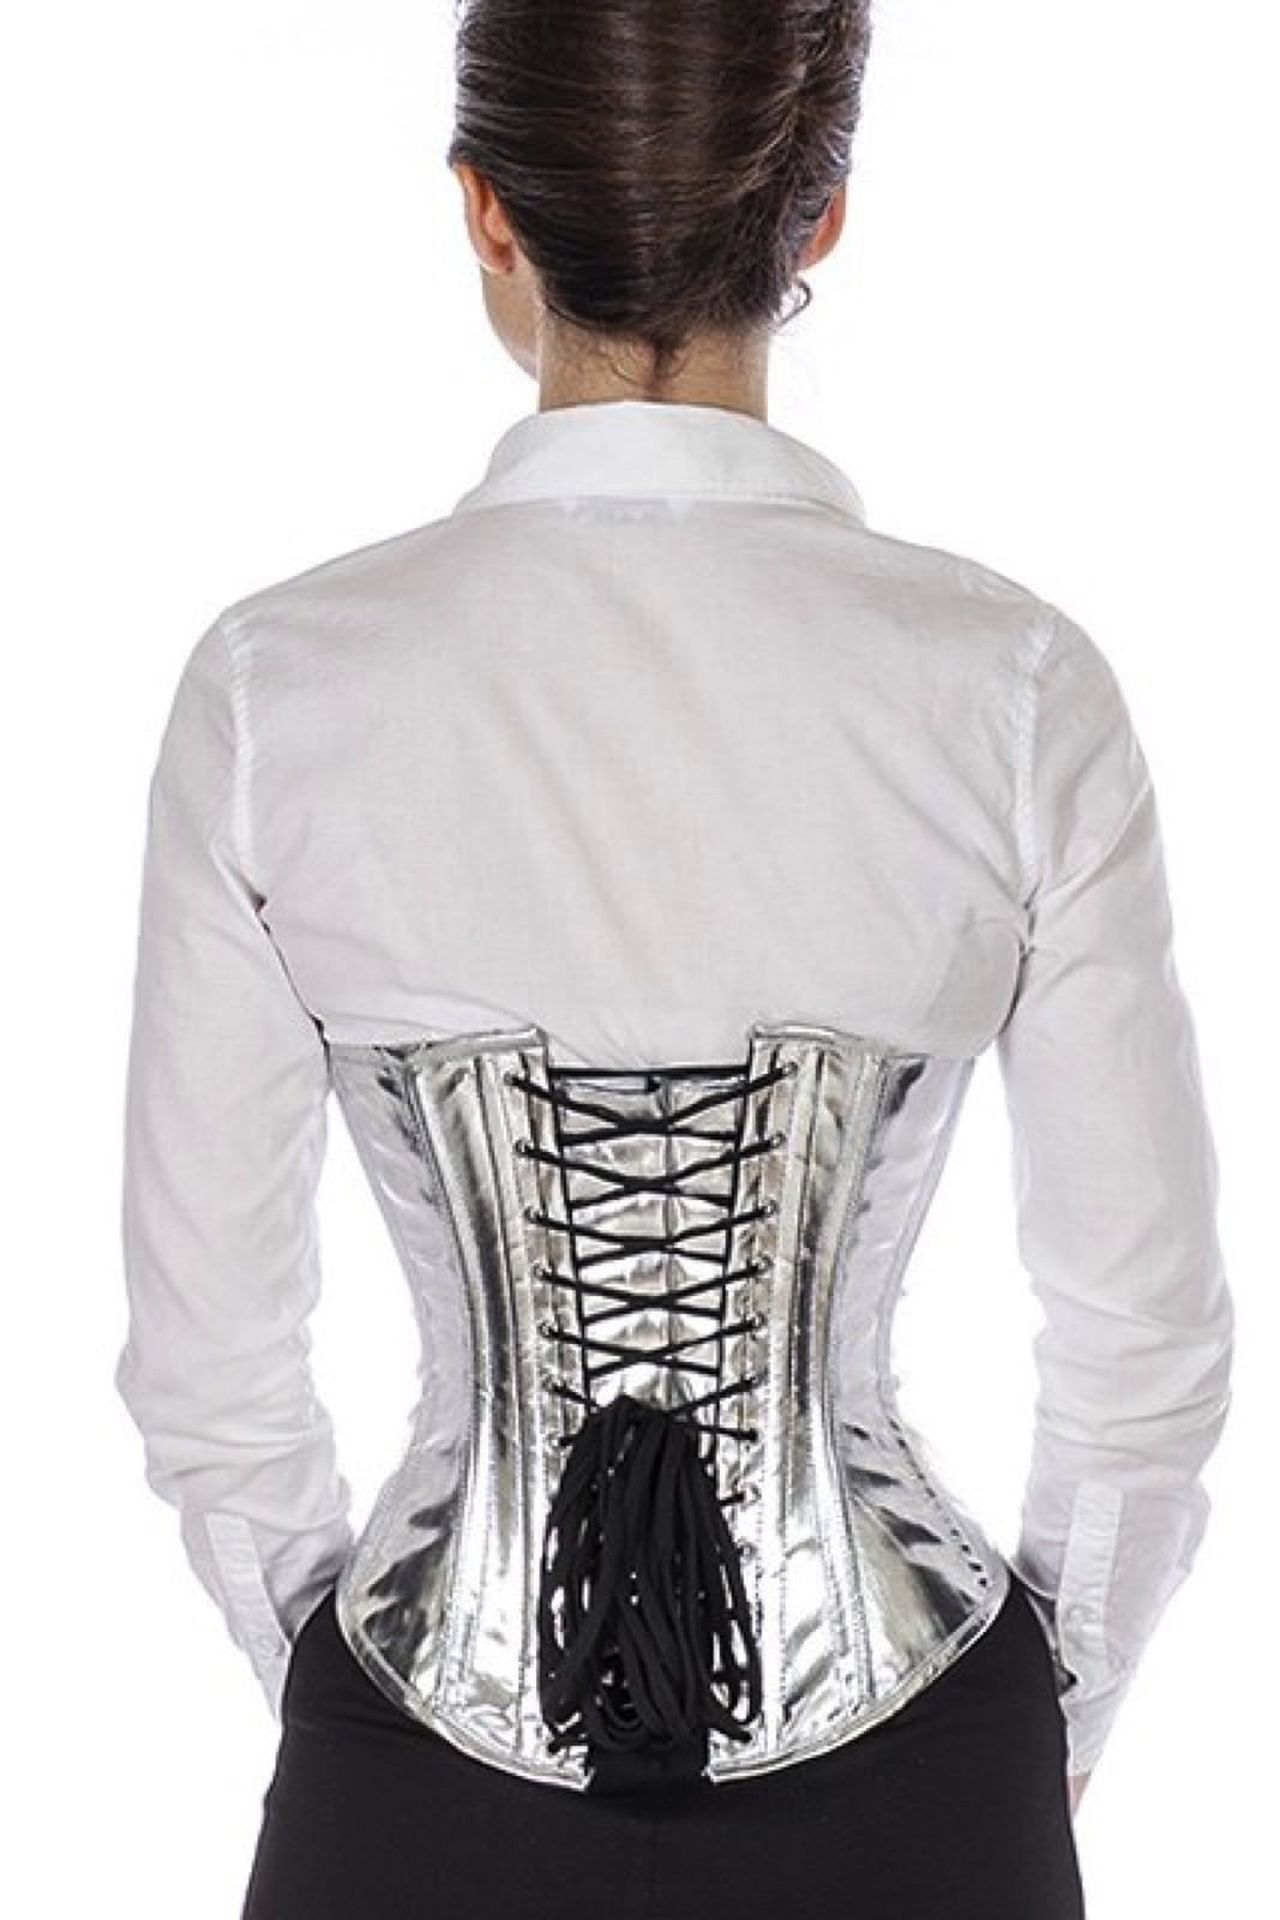 Lak corset zilver glitter onderborst Korset puG4